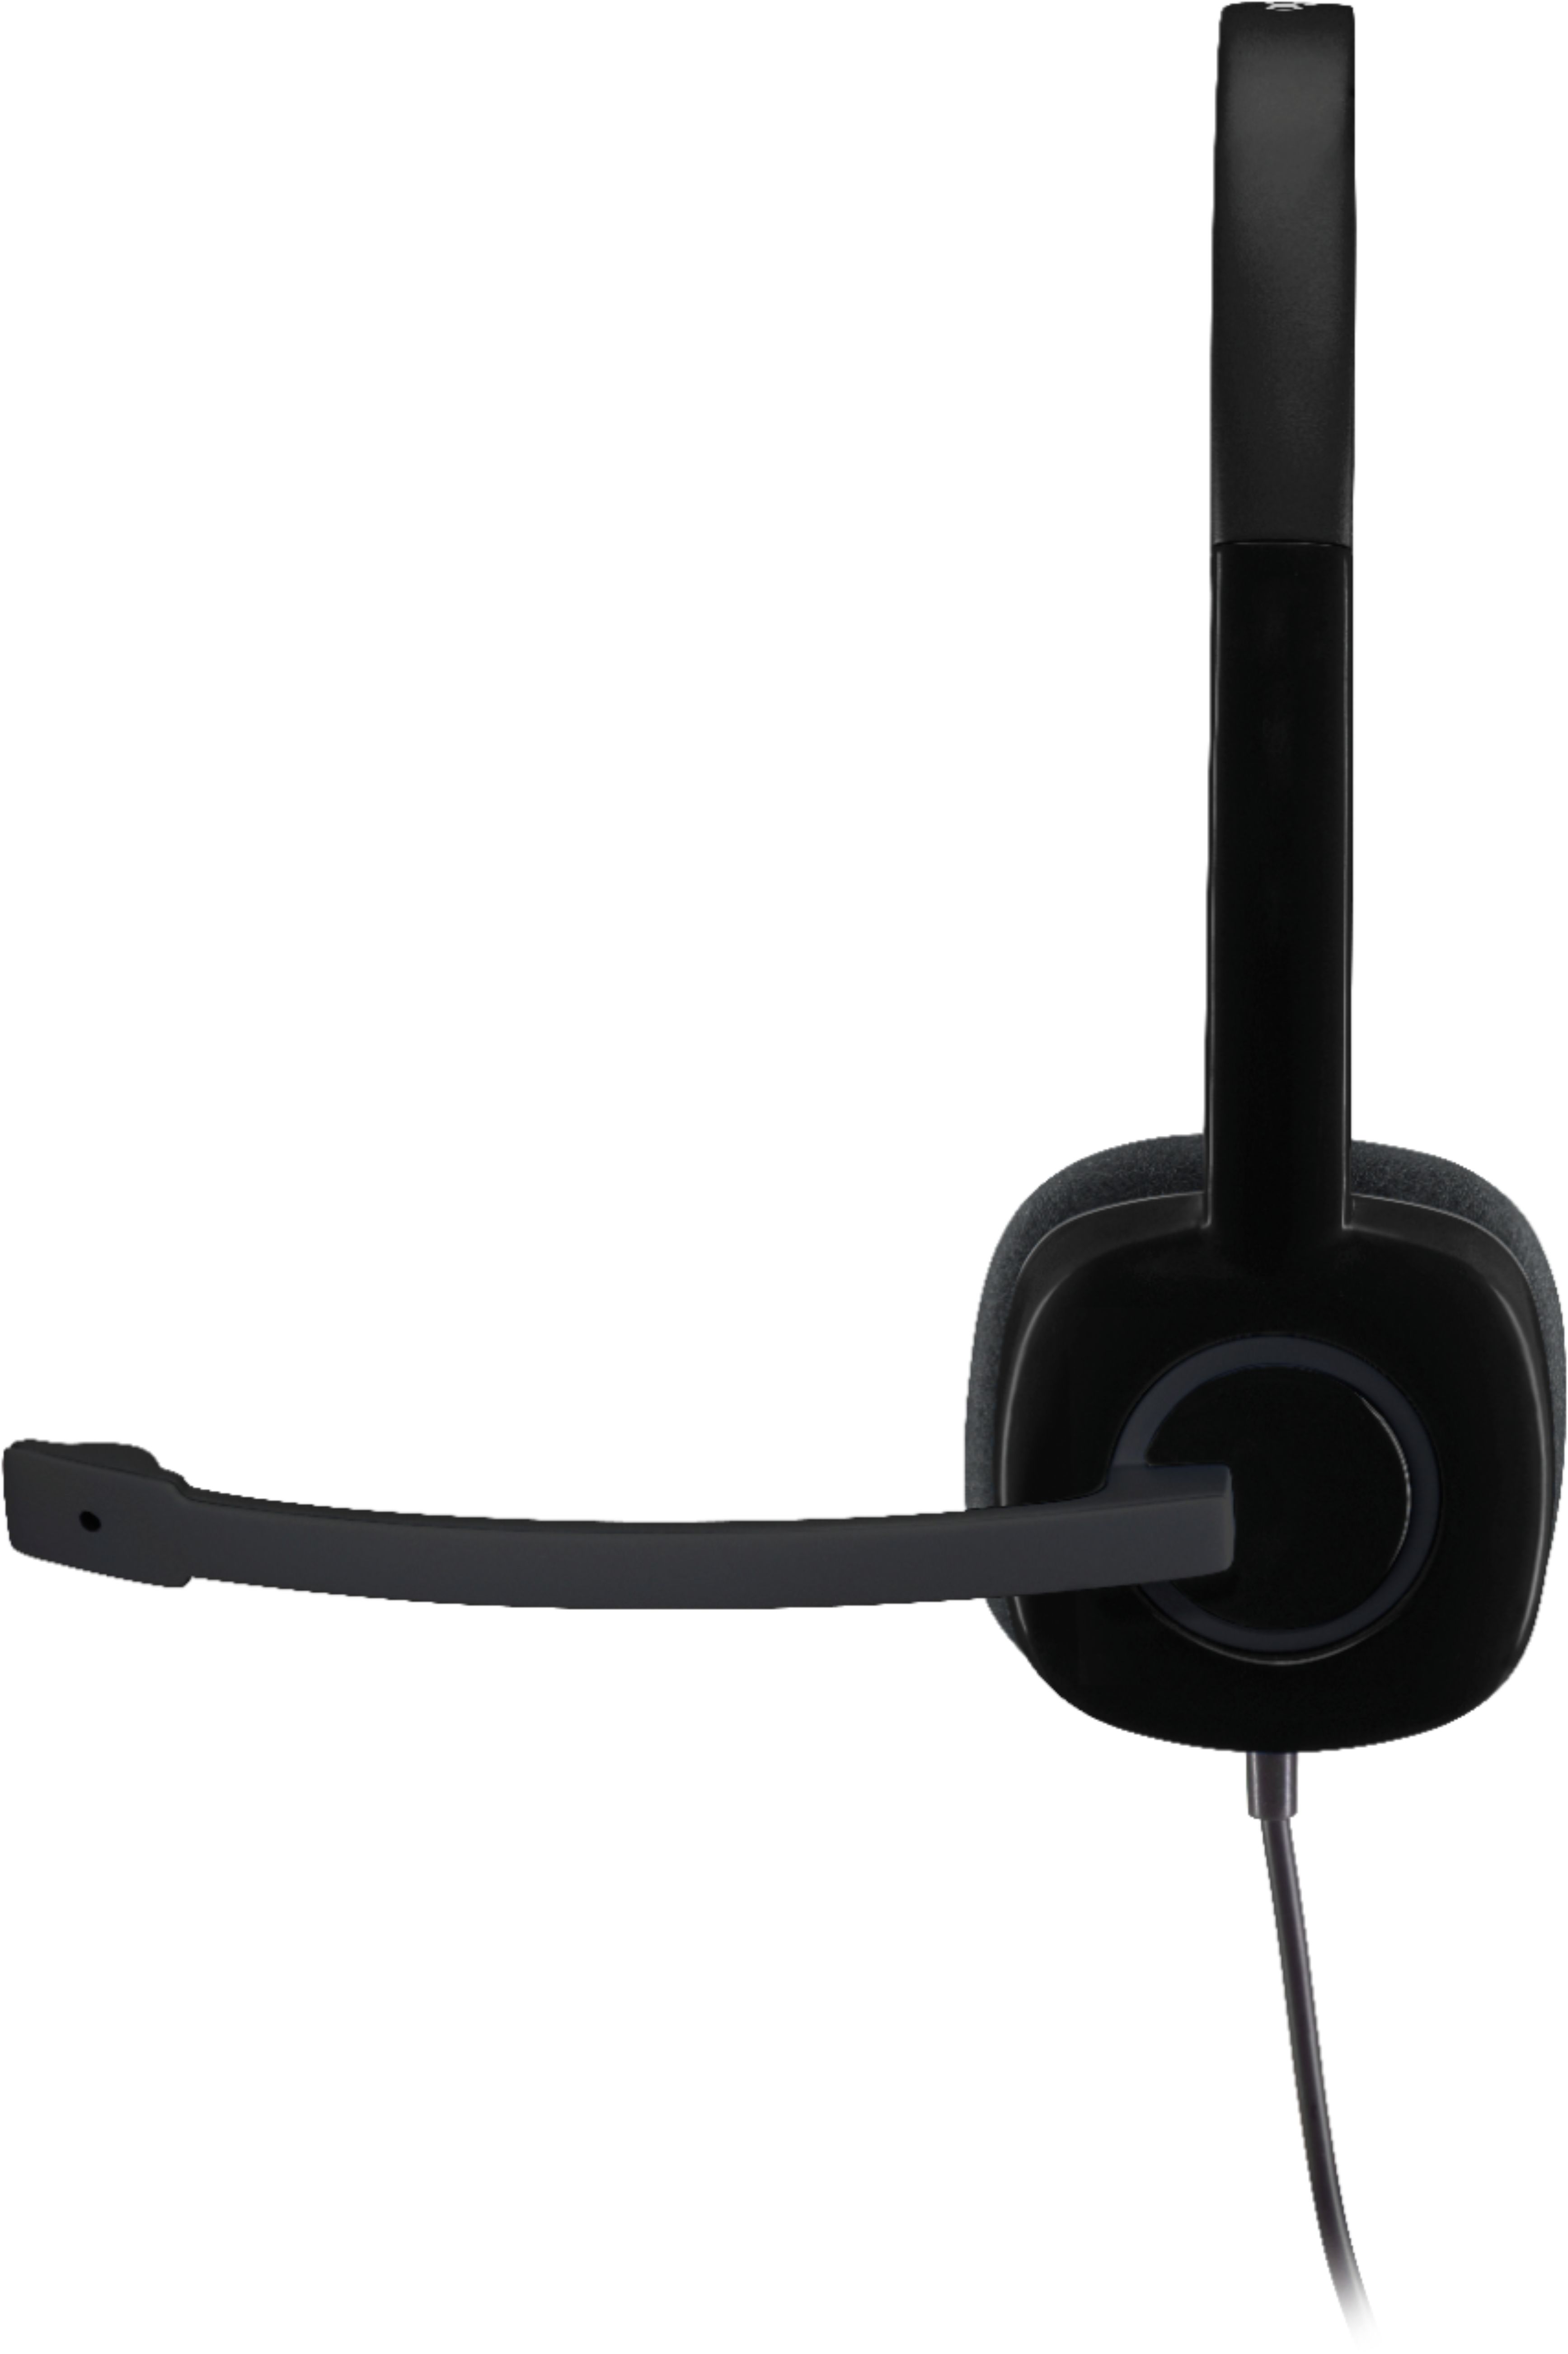 Left View: Logitech - H151 Wired On-Ear Headphones - Black